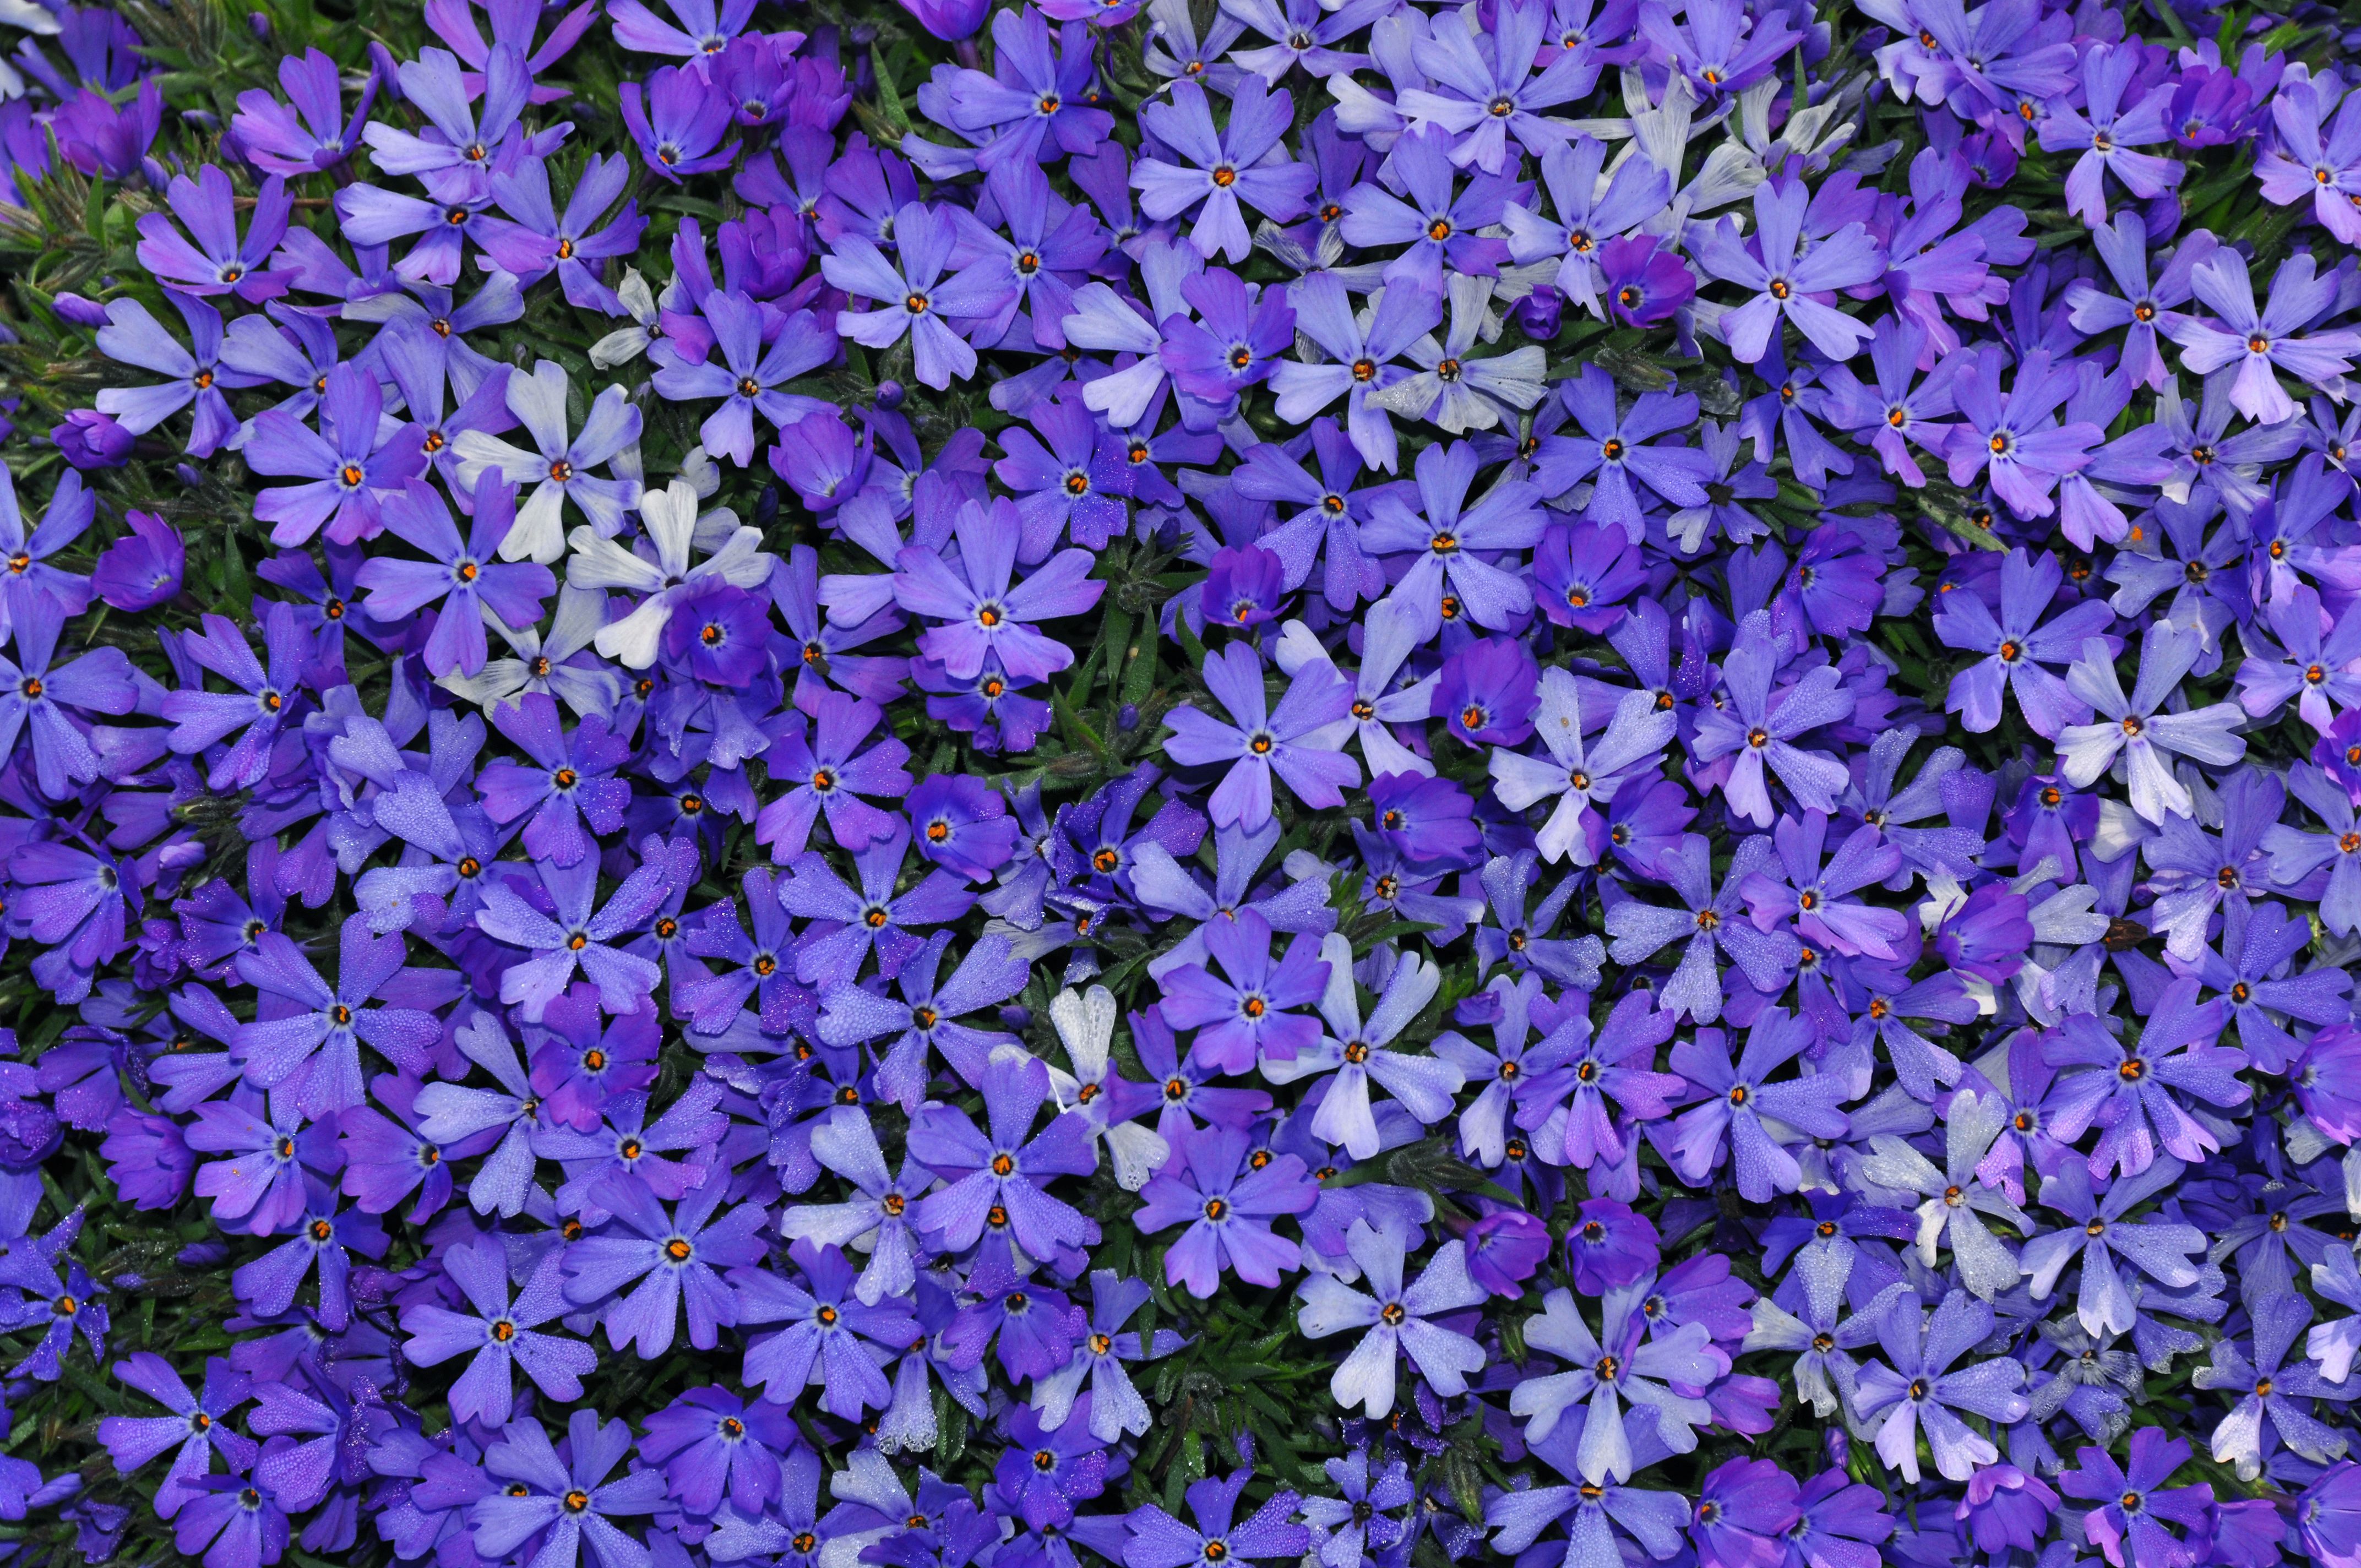 images/plants/phlox/phl-violet-pinwheels/phl-violet-pinwheels-0008.jpg